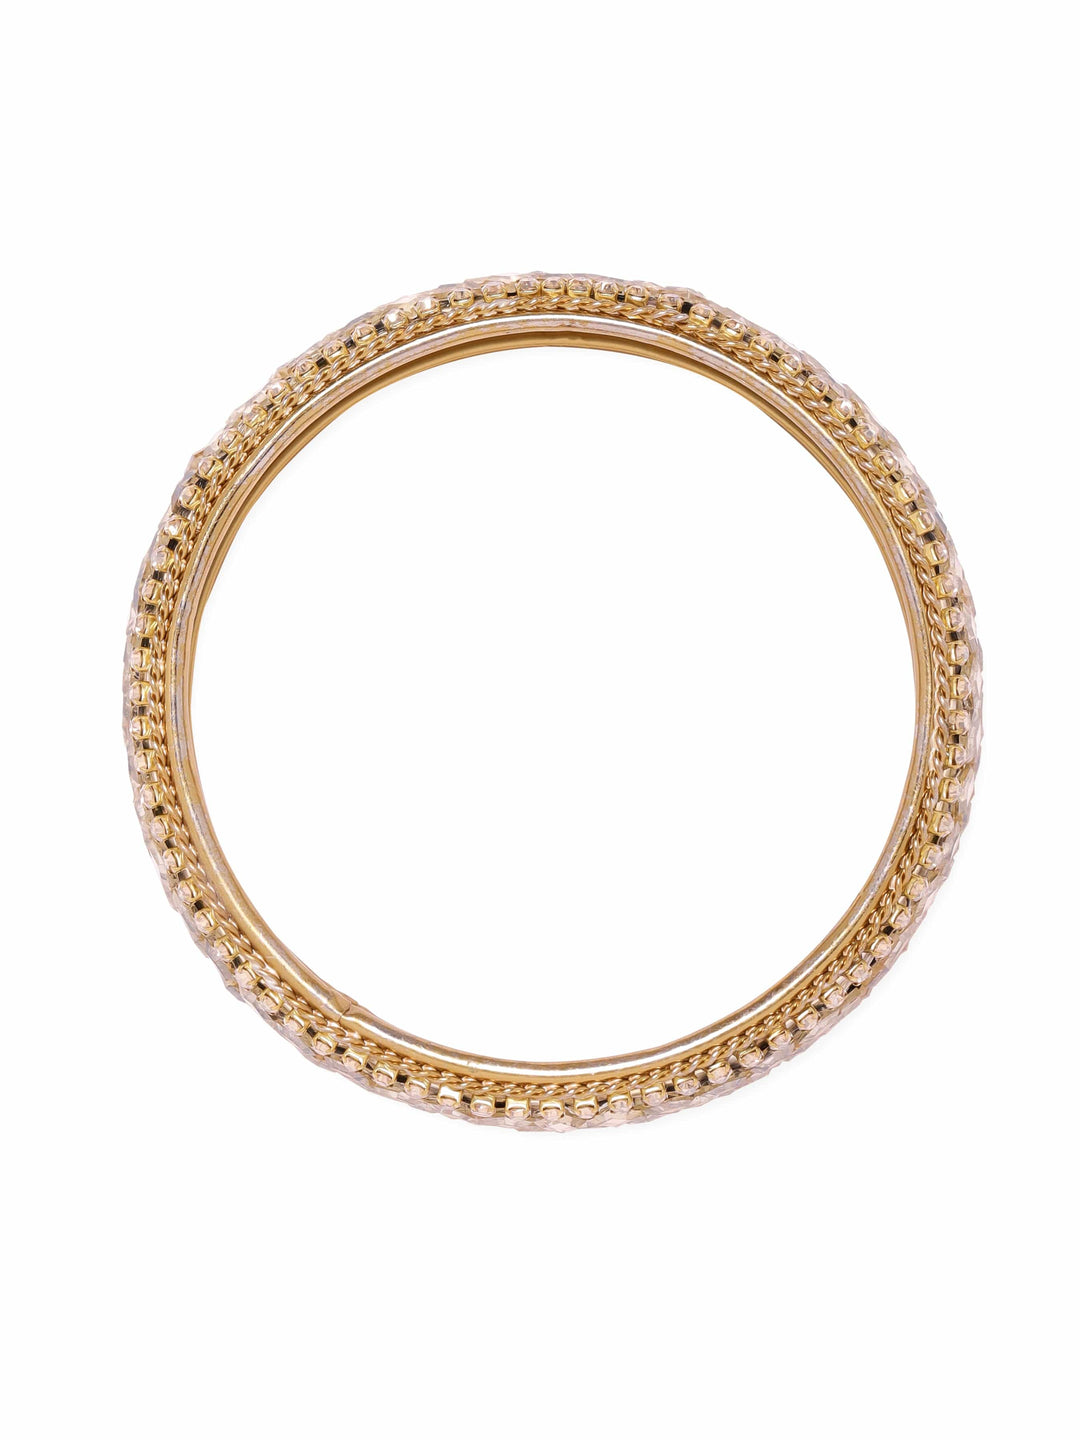 Rubans Set of 6, Antique Gold Mirror Studded Glorious Statement Bangles Bangles & Bracelets